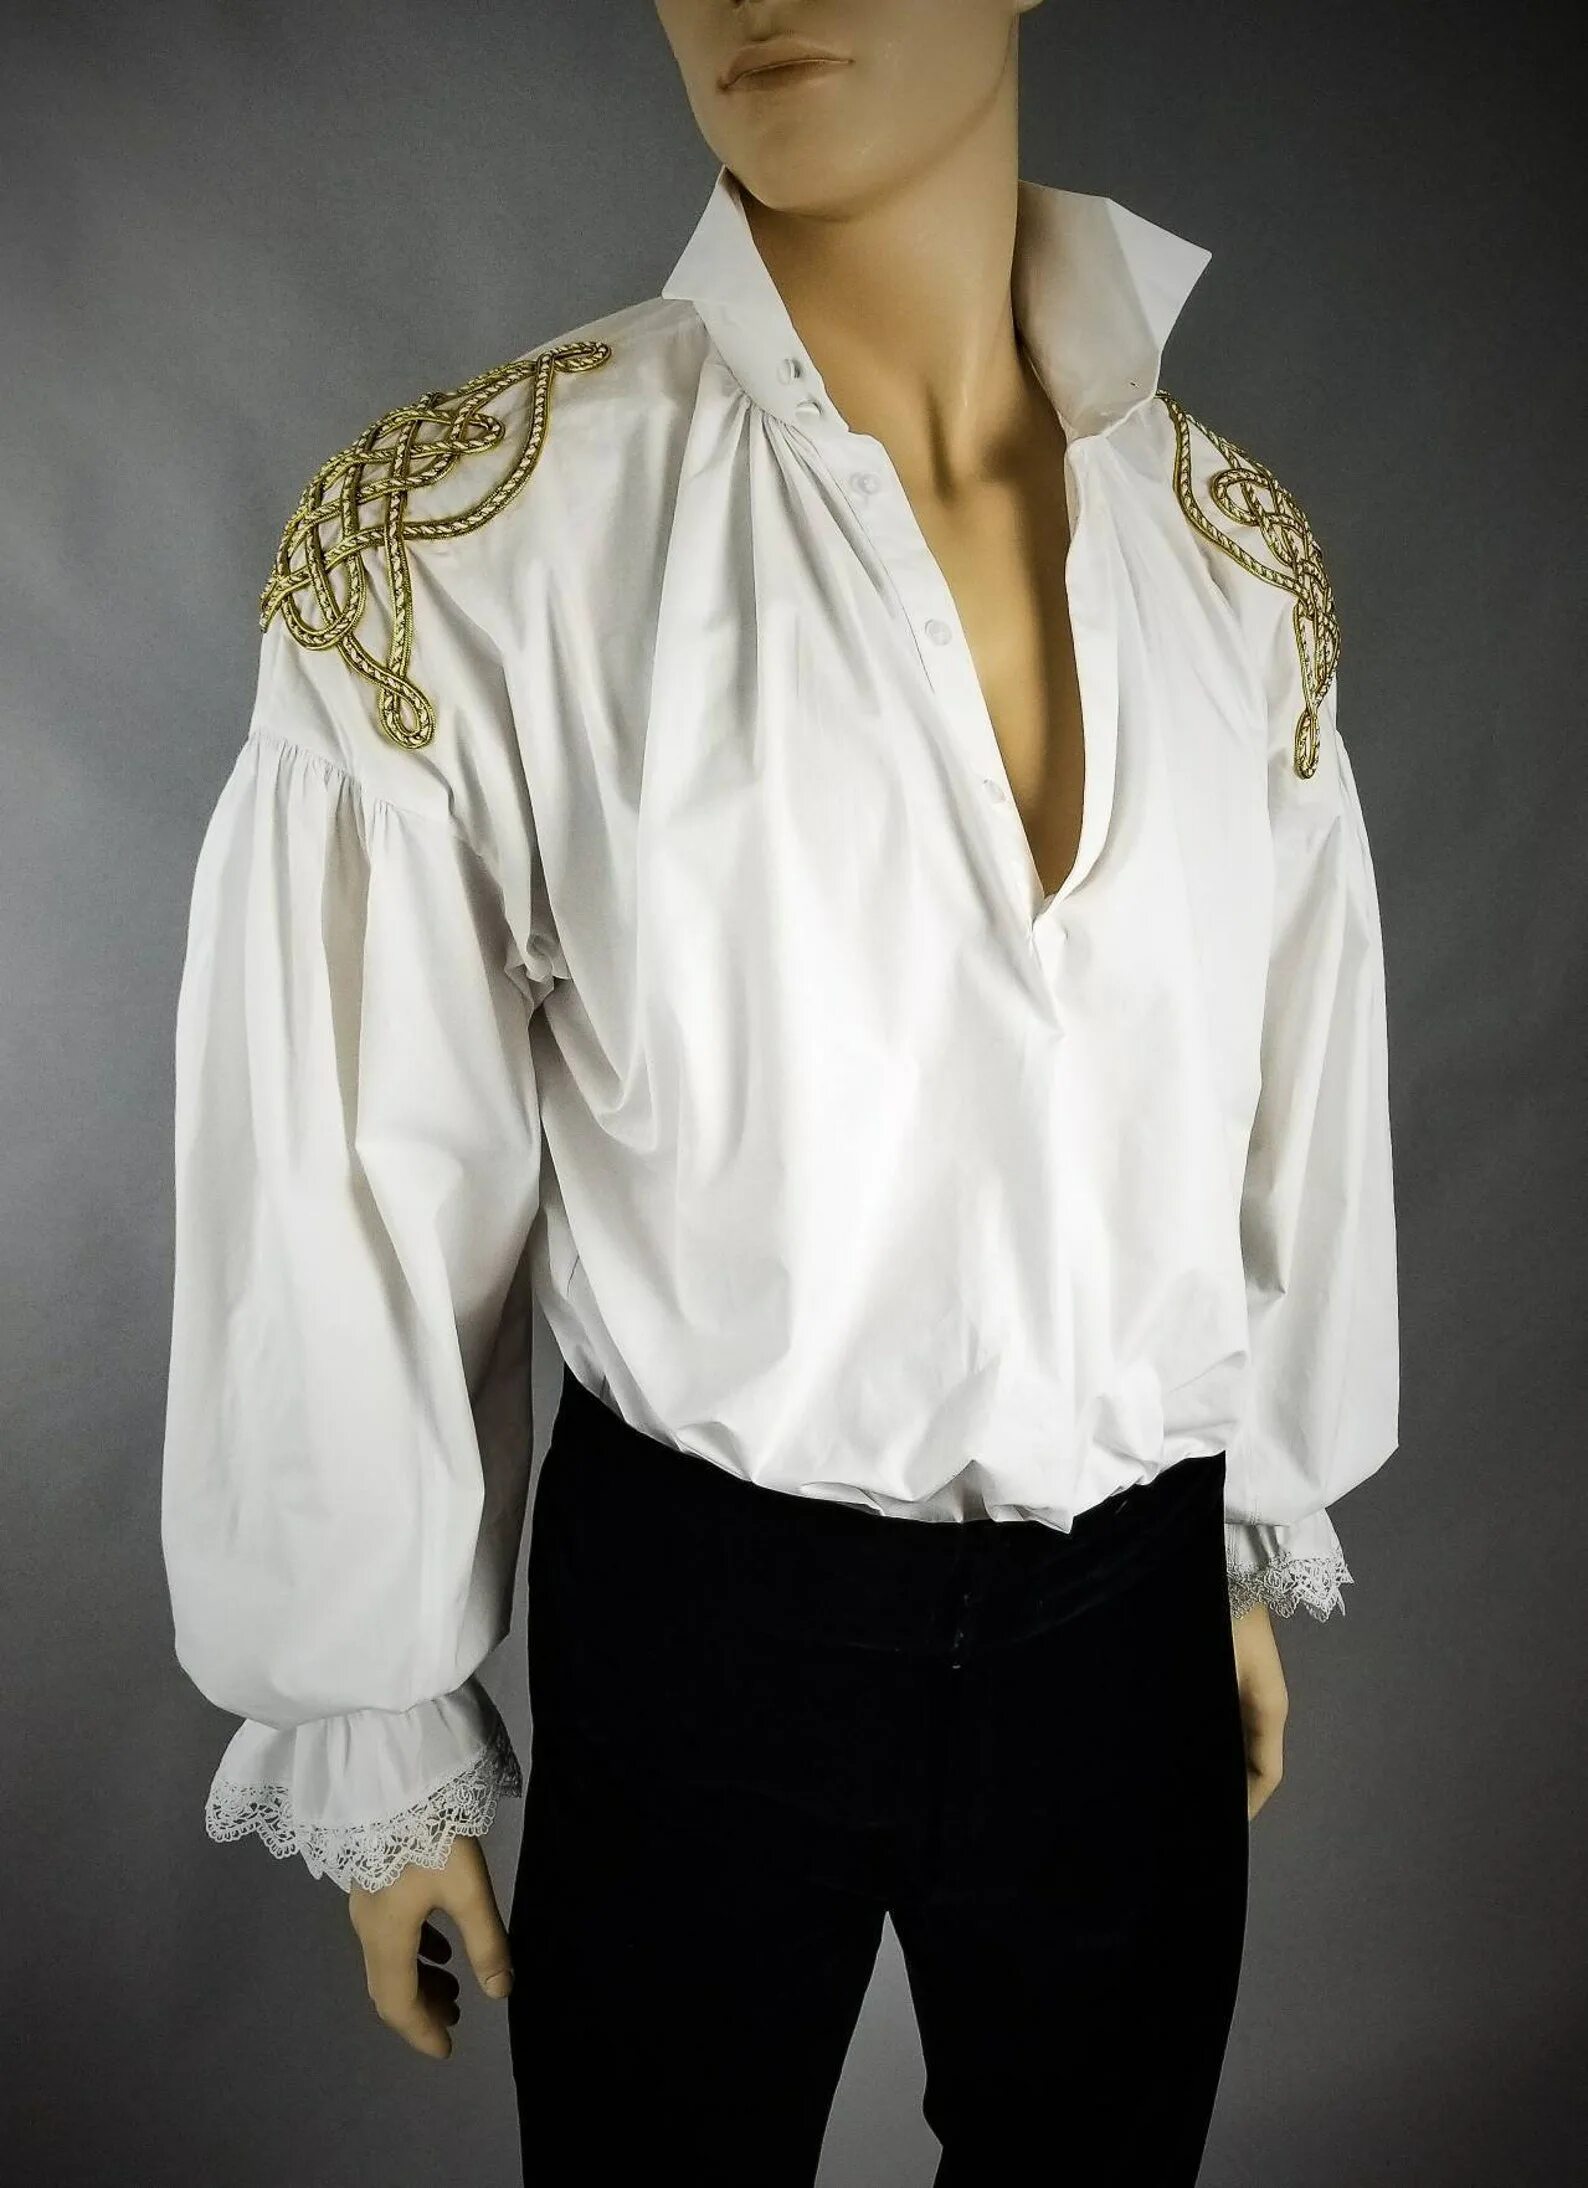 Старая мужская рубашка. Рубашка с широкими рукавами мужская. Рубашки в стиле 19 века. Старинная мужская рубашка. Аристократическая рубашка.